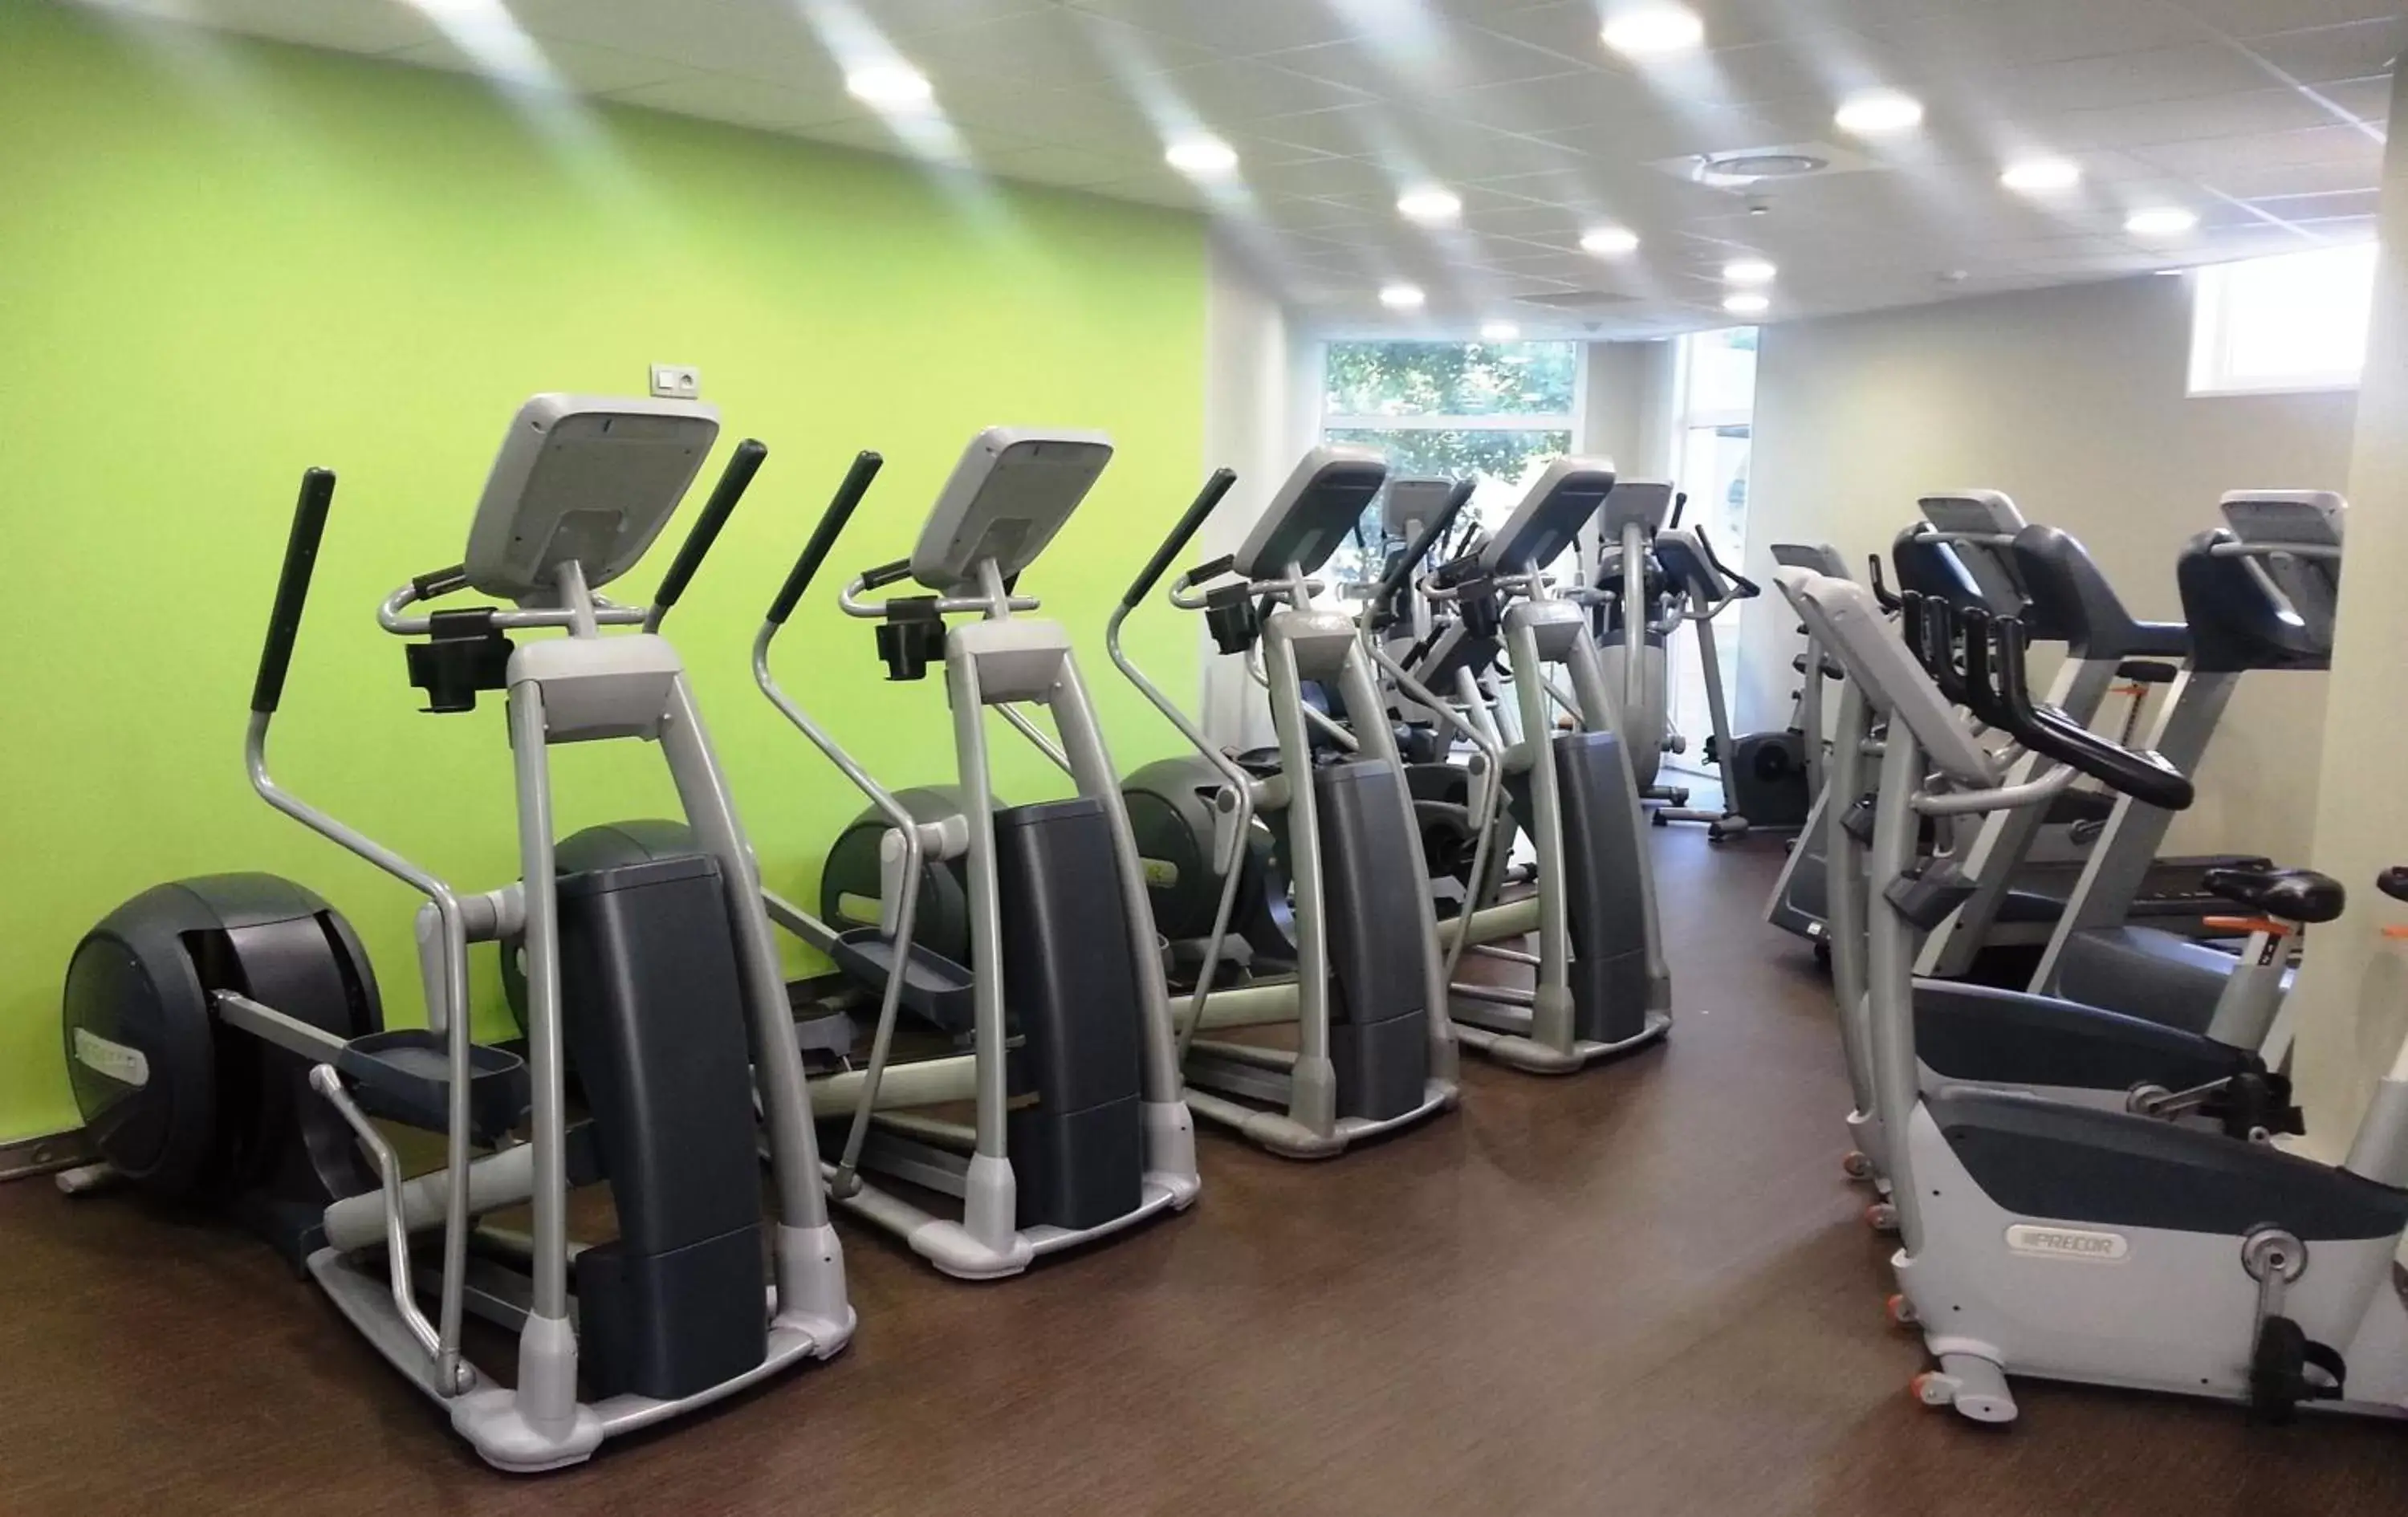 Fitness centre/facilities, Fitness Center/Facilities in Mercure Lyon Est Villefontaine